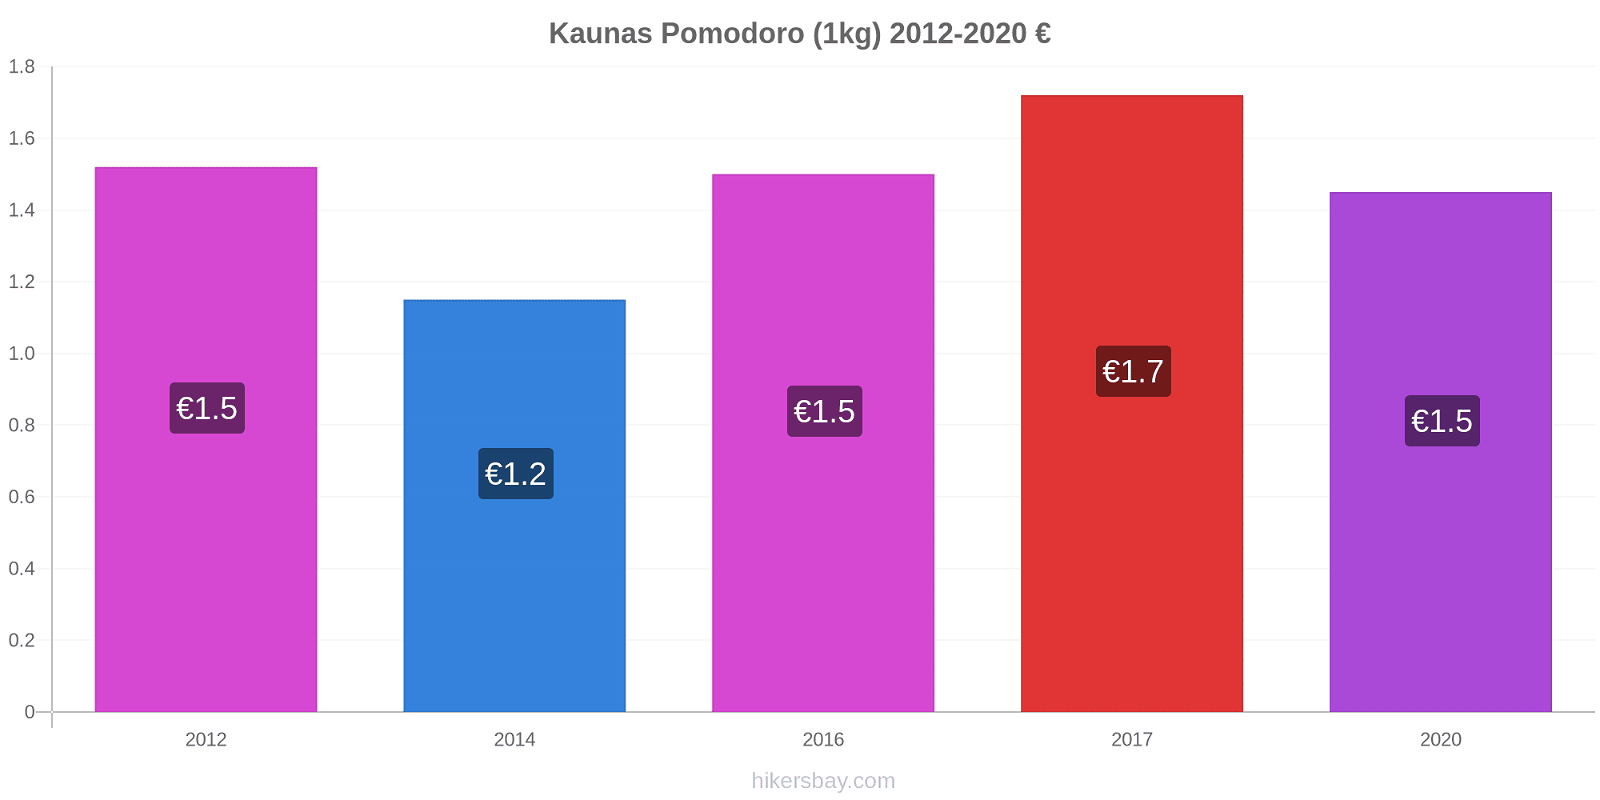 Kaunas variazioni di prezzo Pomodoro (1kg) hikersbay.com